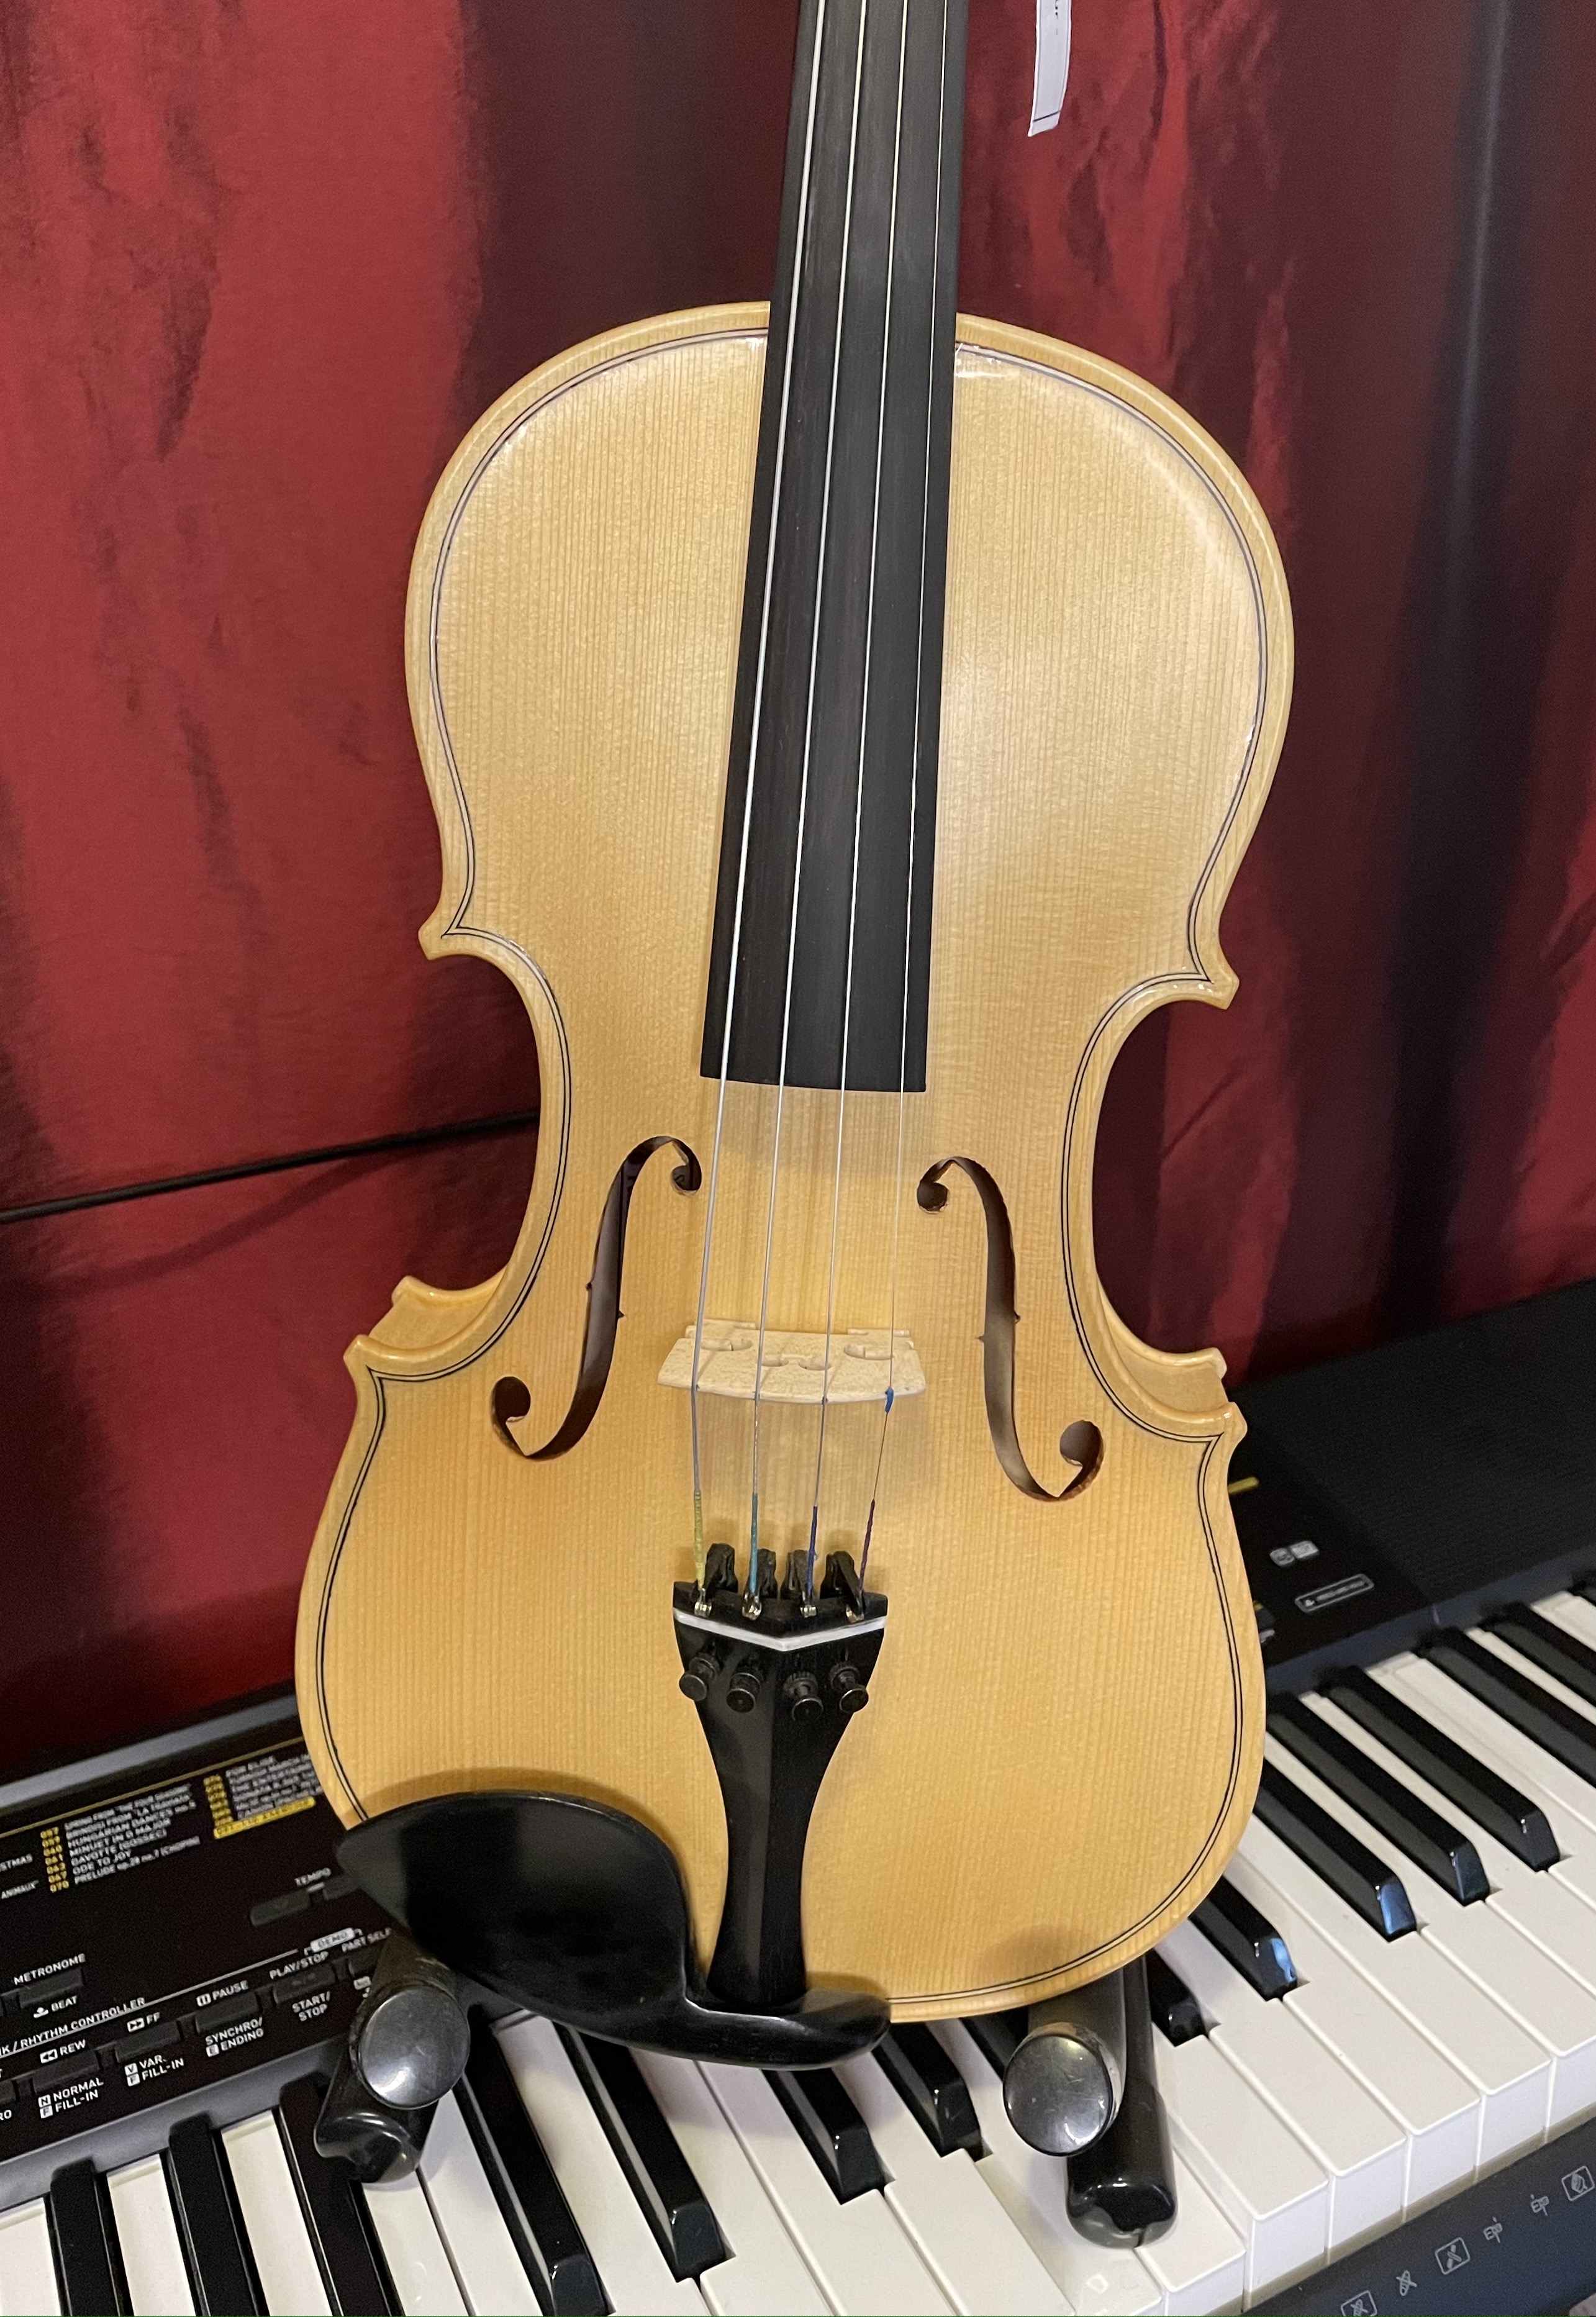 4-4-gems-1-gliga-violin-transparent-varnish-intermediate-to-advanced-level-top.jpg